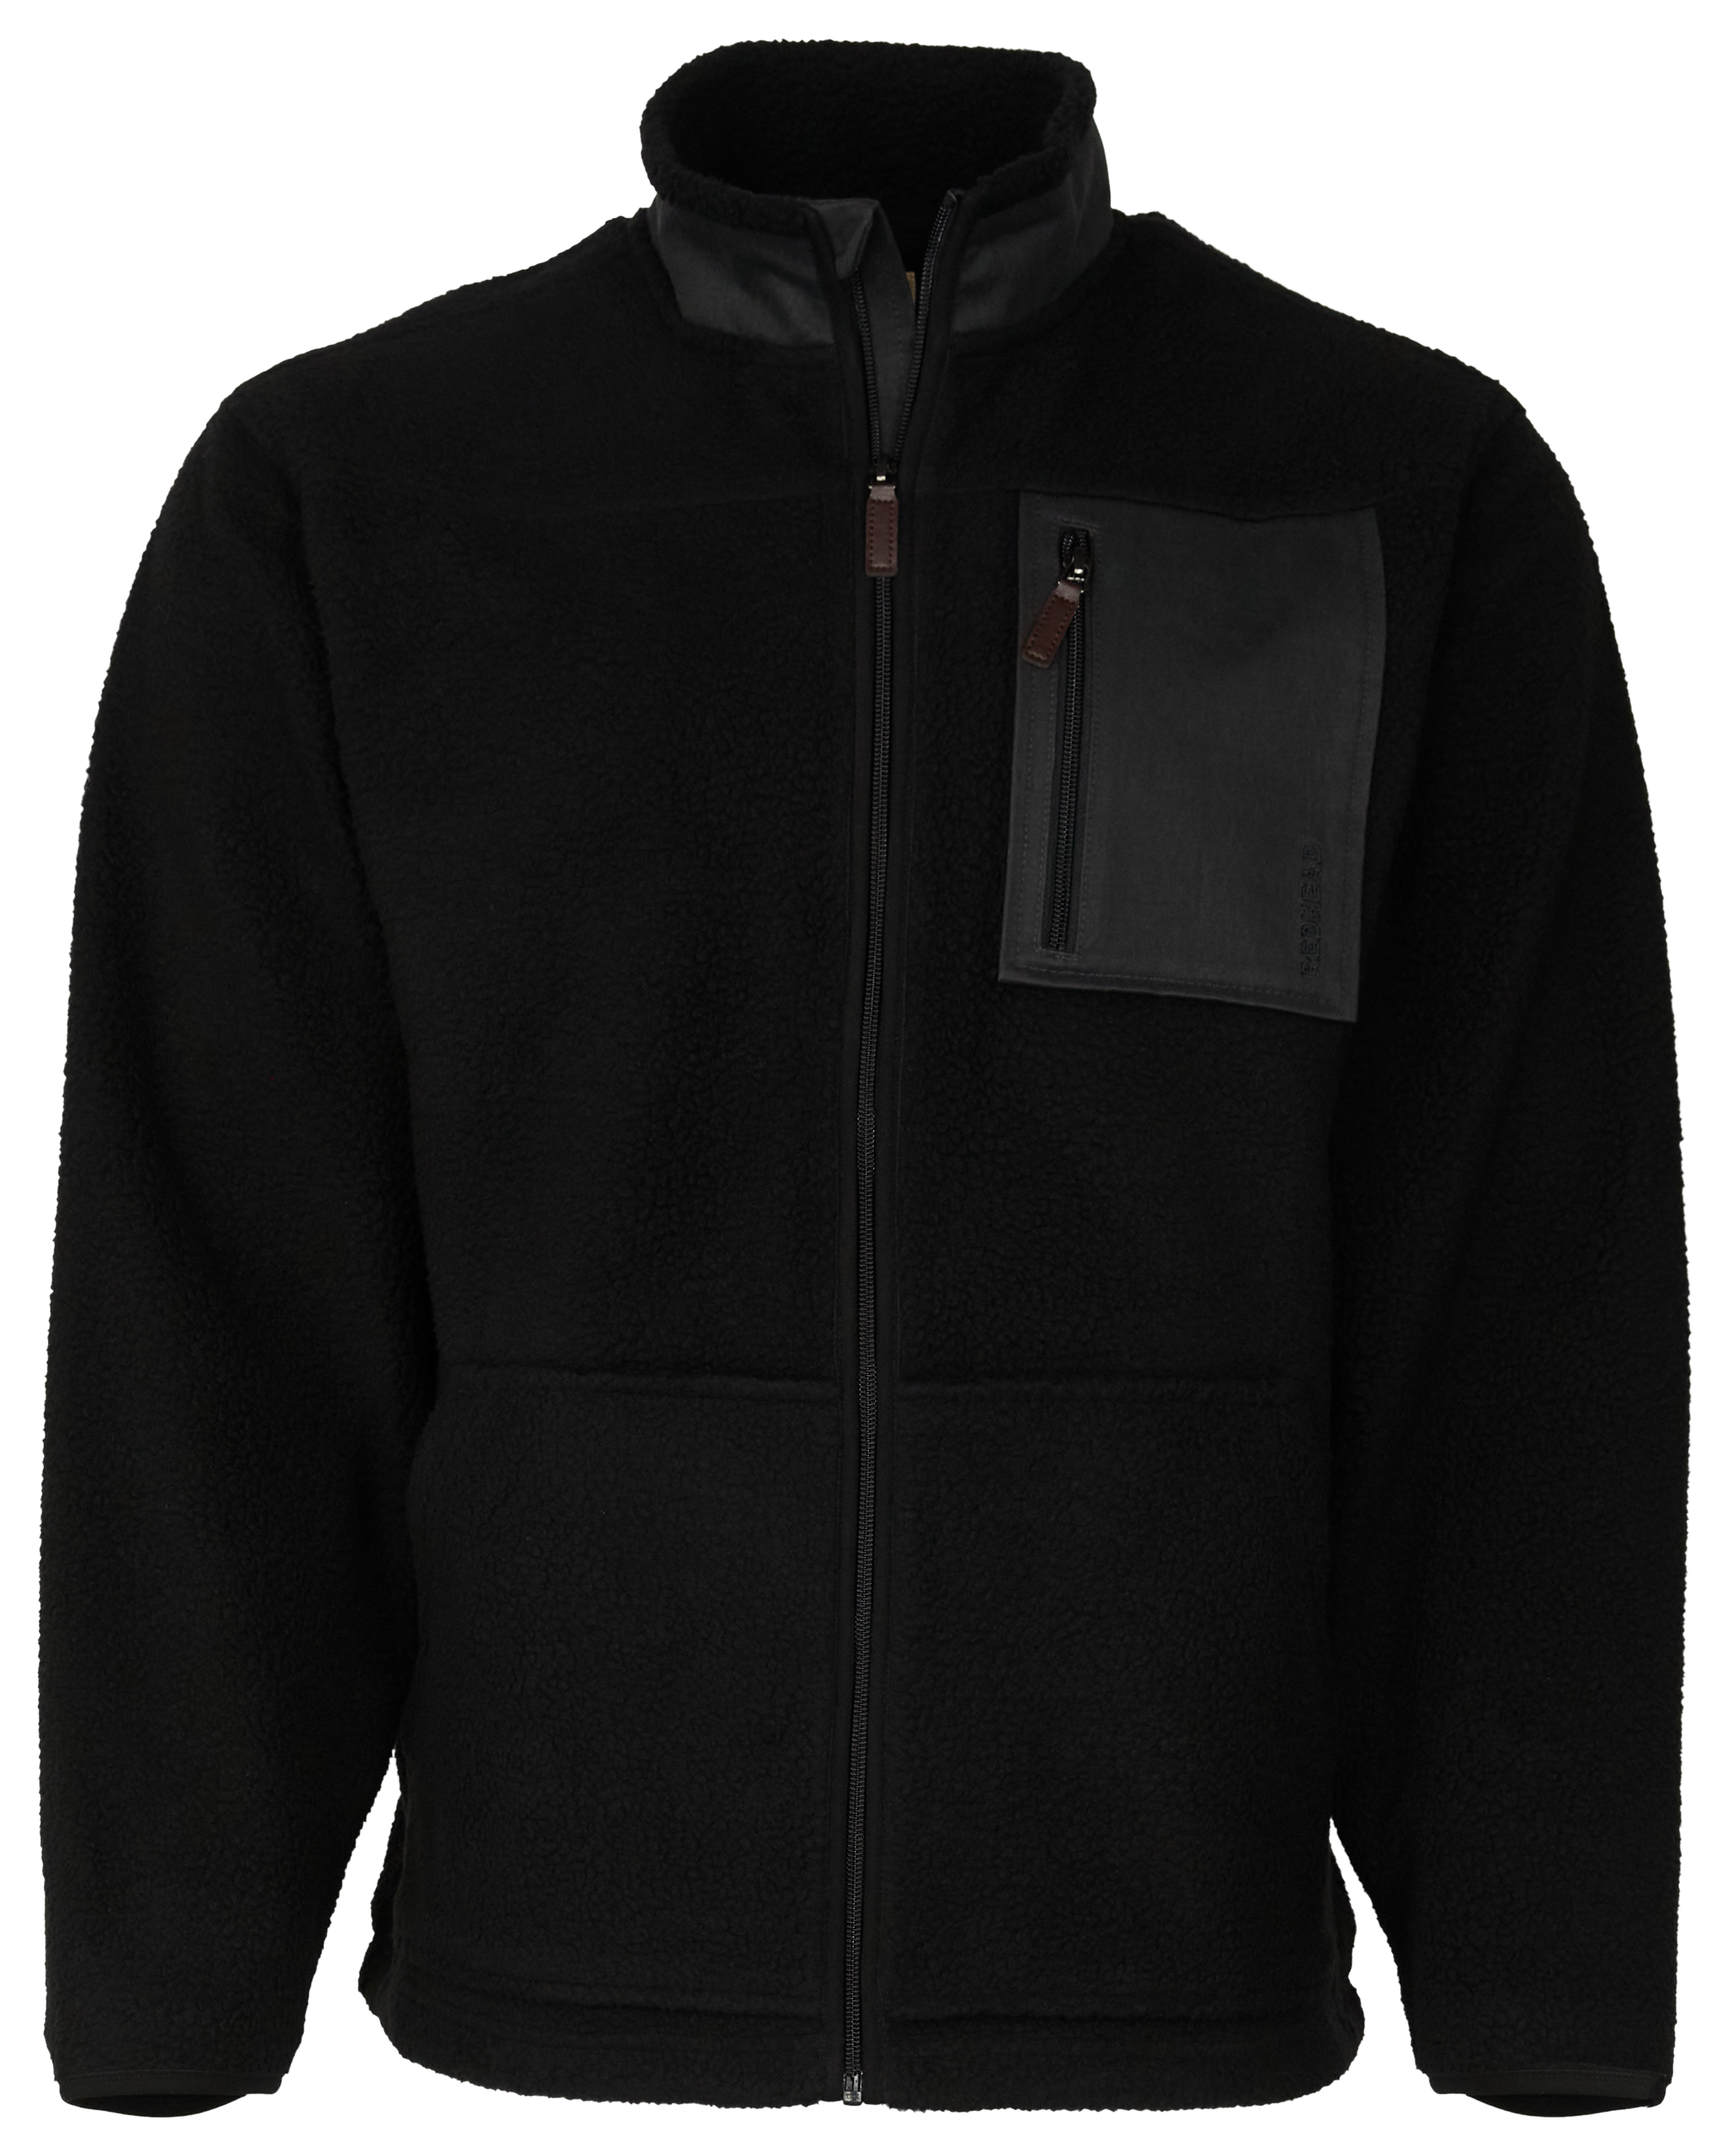 Middle-aged Men Winter Warm Thick Berber Fleece Jacket Coat Outwear Outdoor